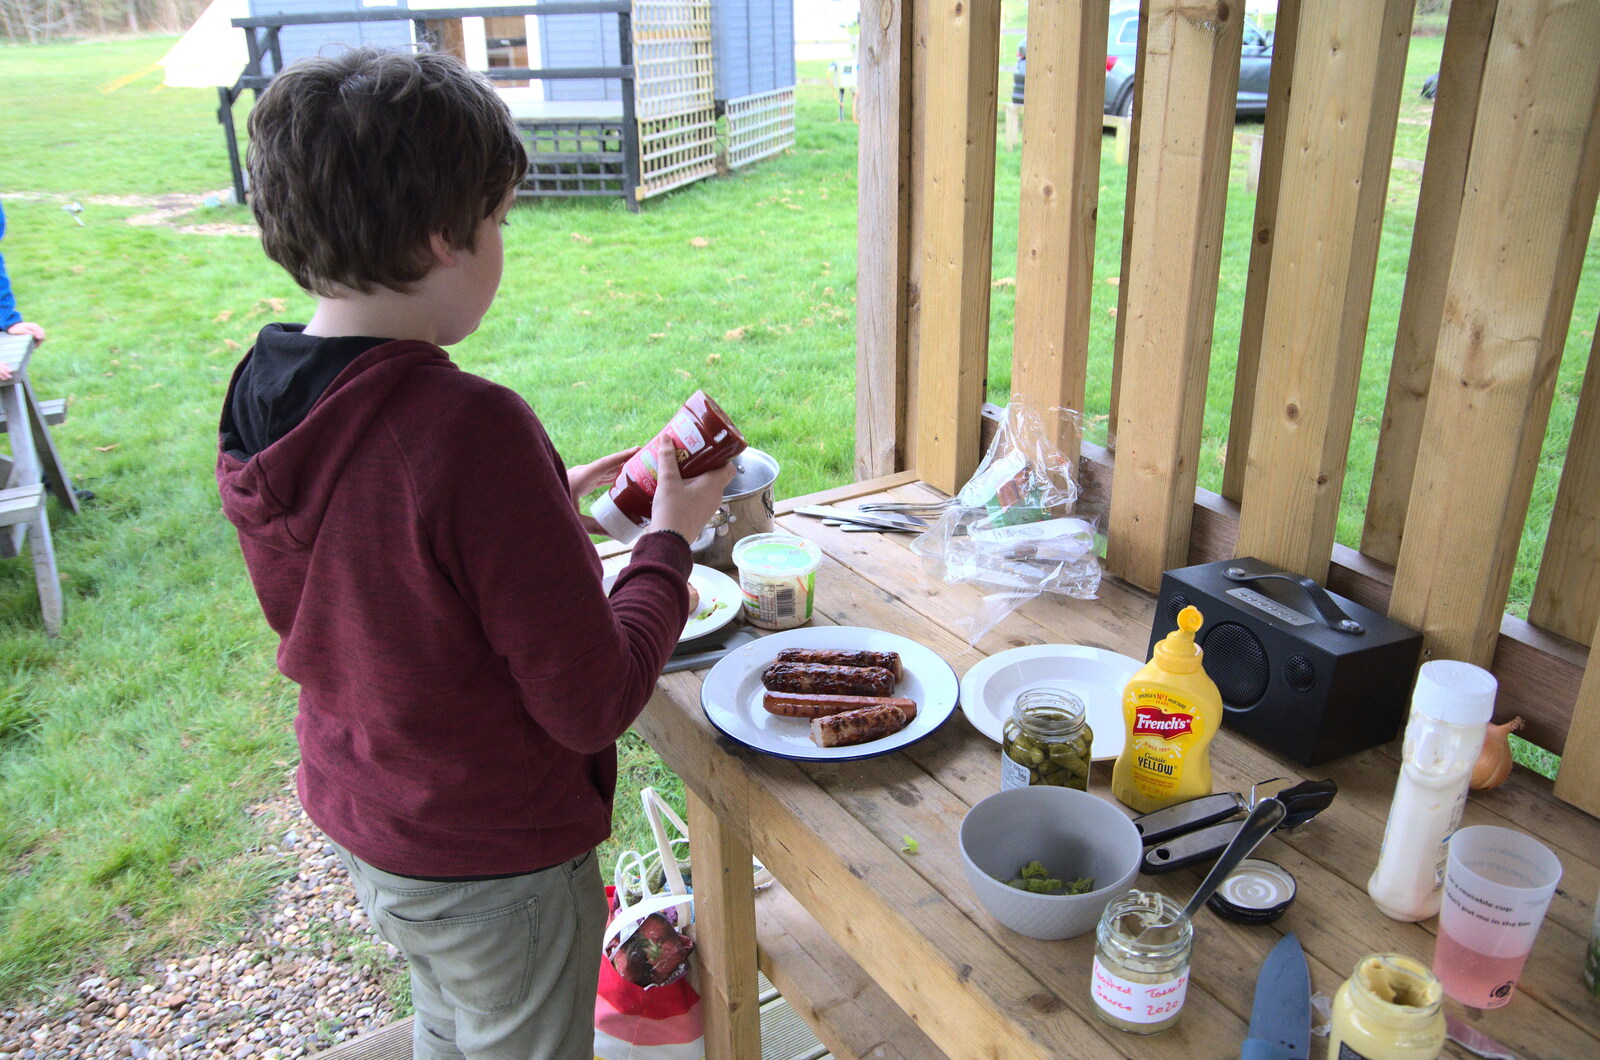 A Camper-Van Trip, West Harling, Norfolk - 13th April 2022: Fred sorts out a hotdog